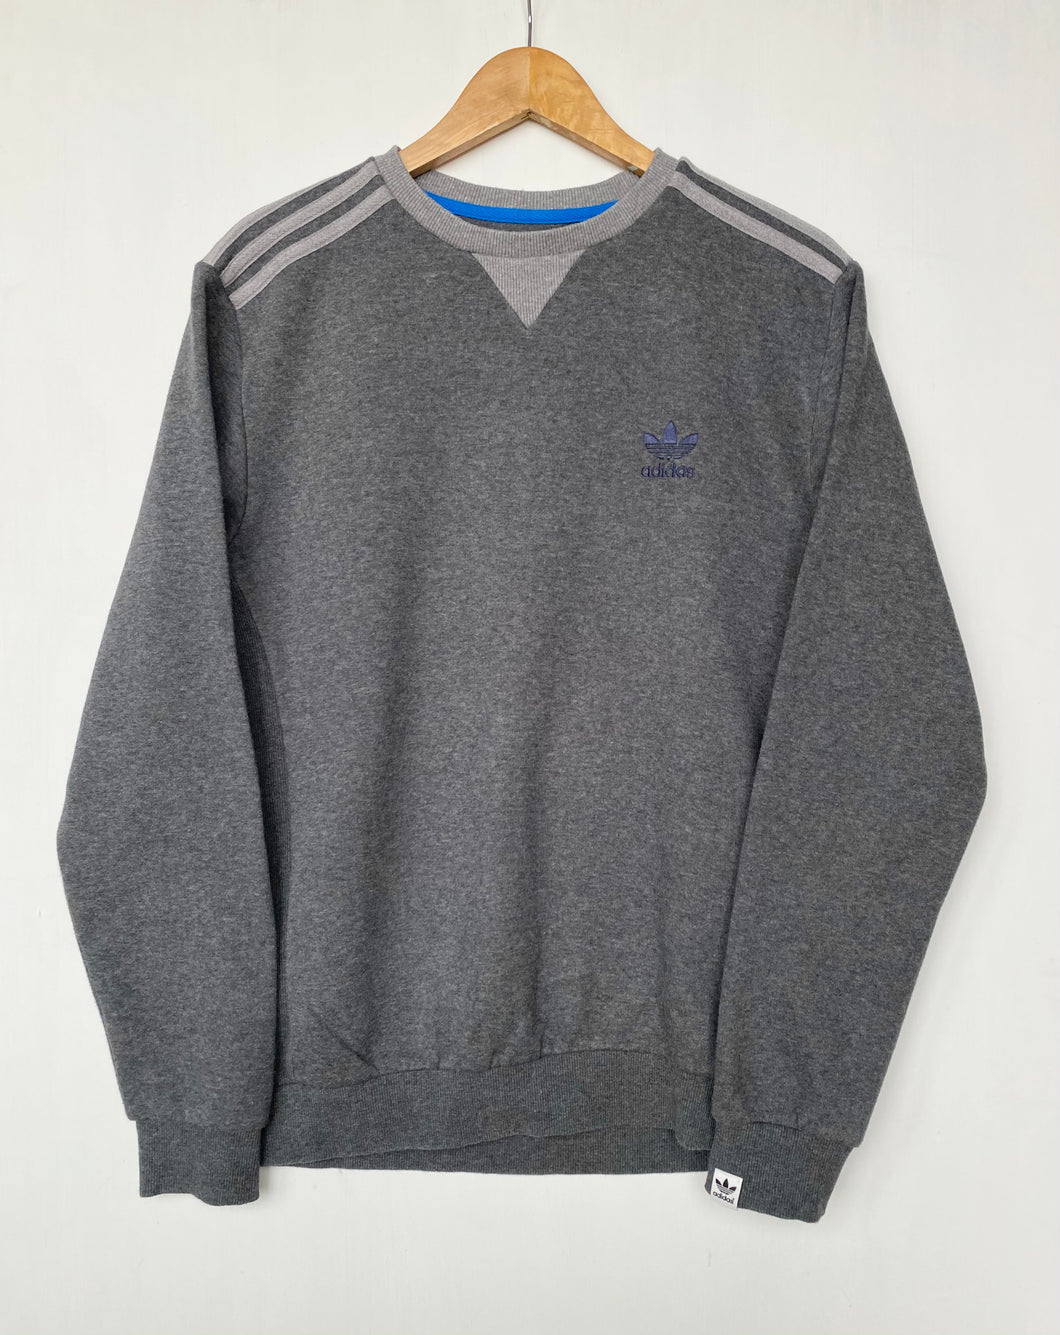 Adidas sweatshirt (M)